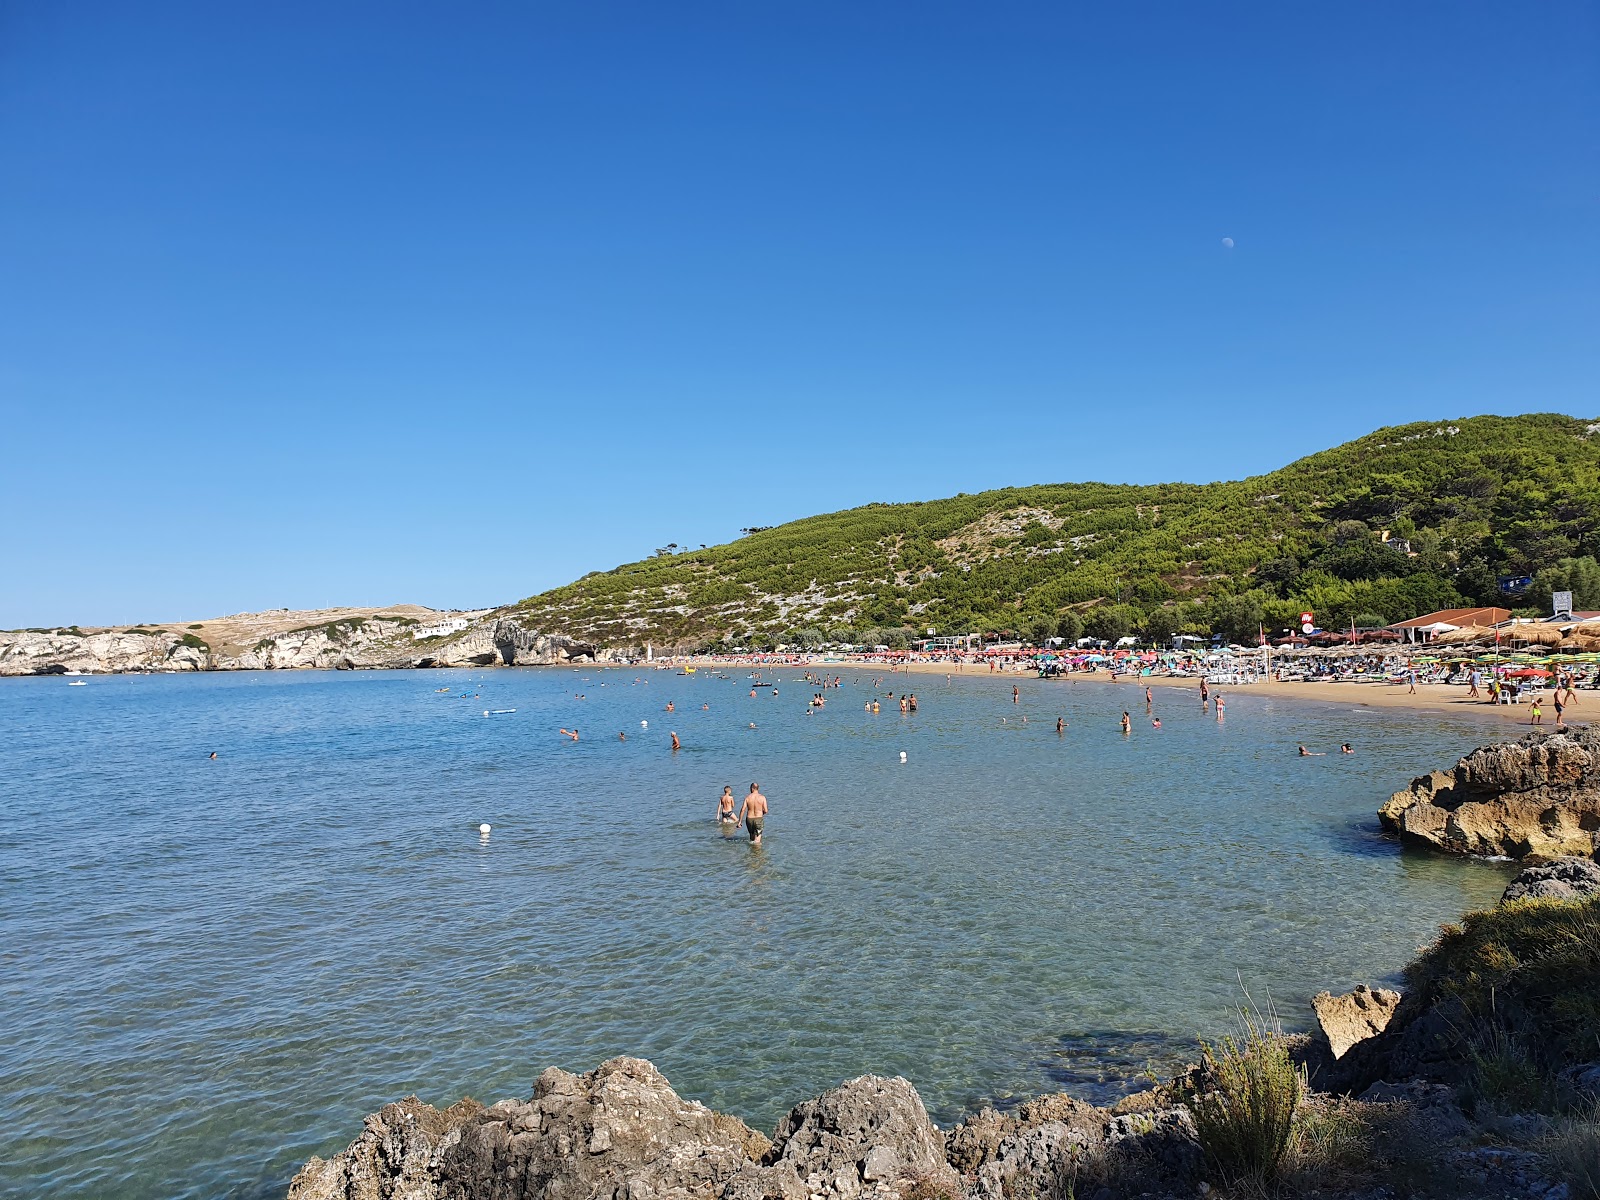 Photo of Spiaggia di San Nicola with brown fine sand surface